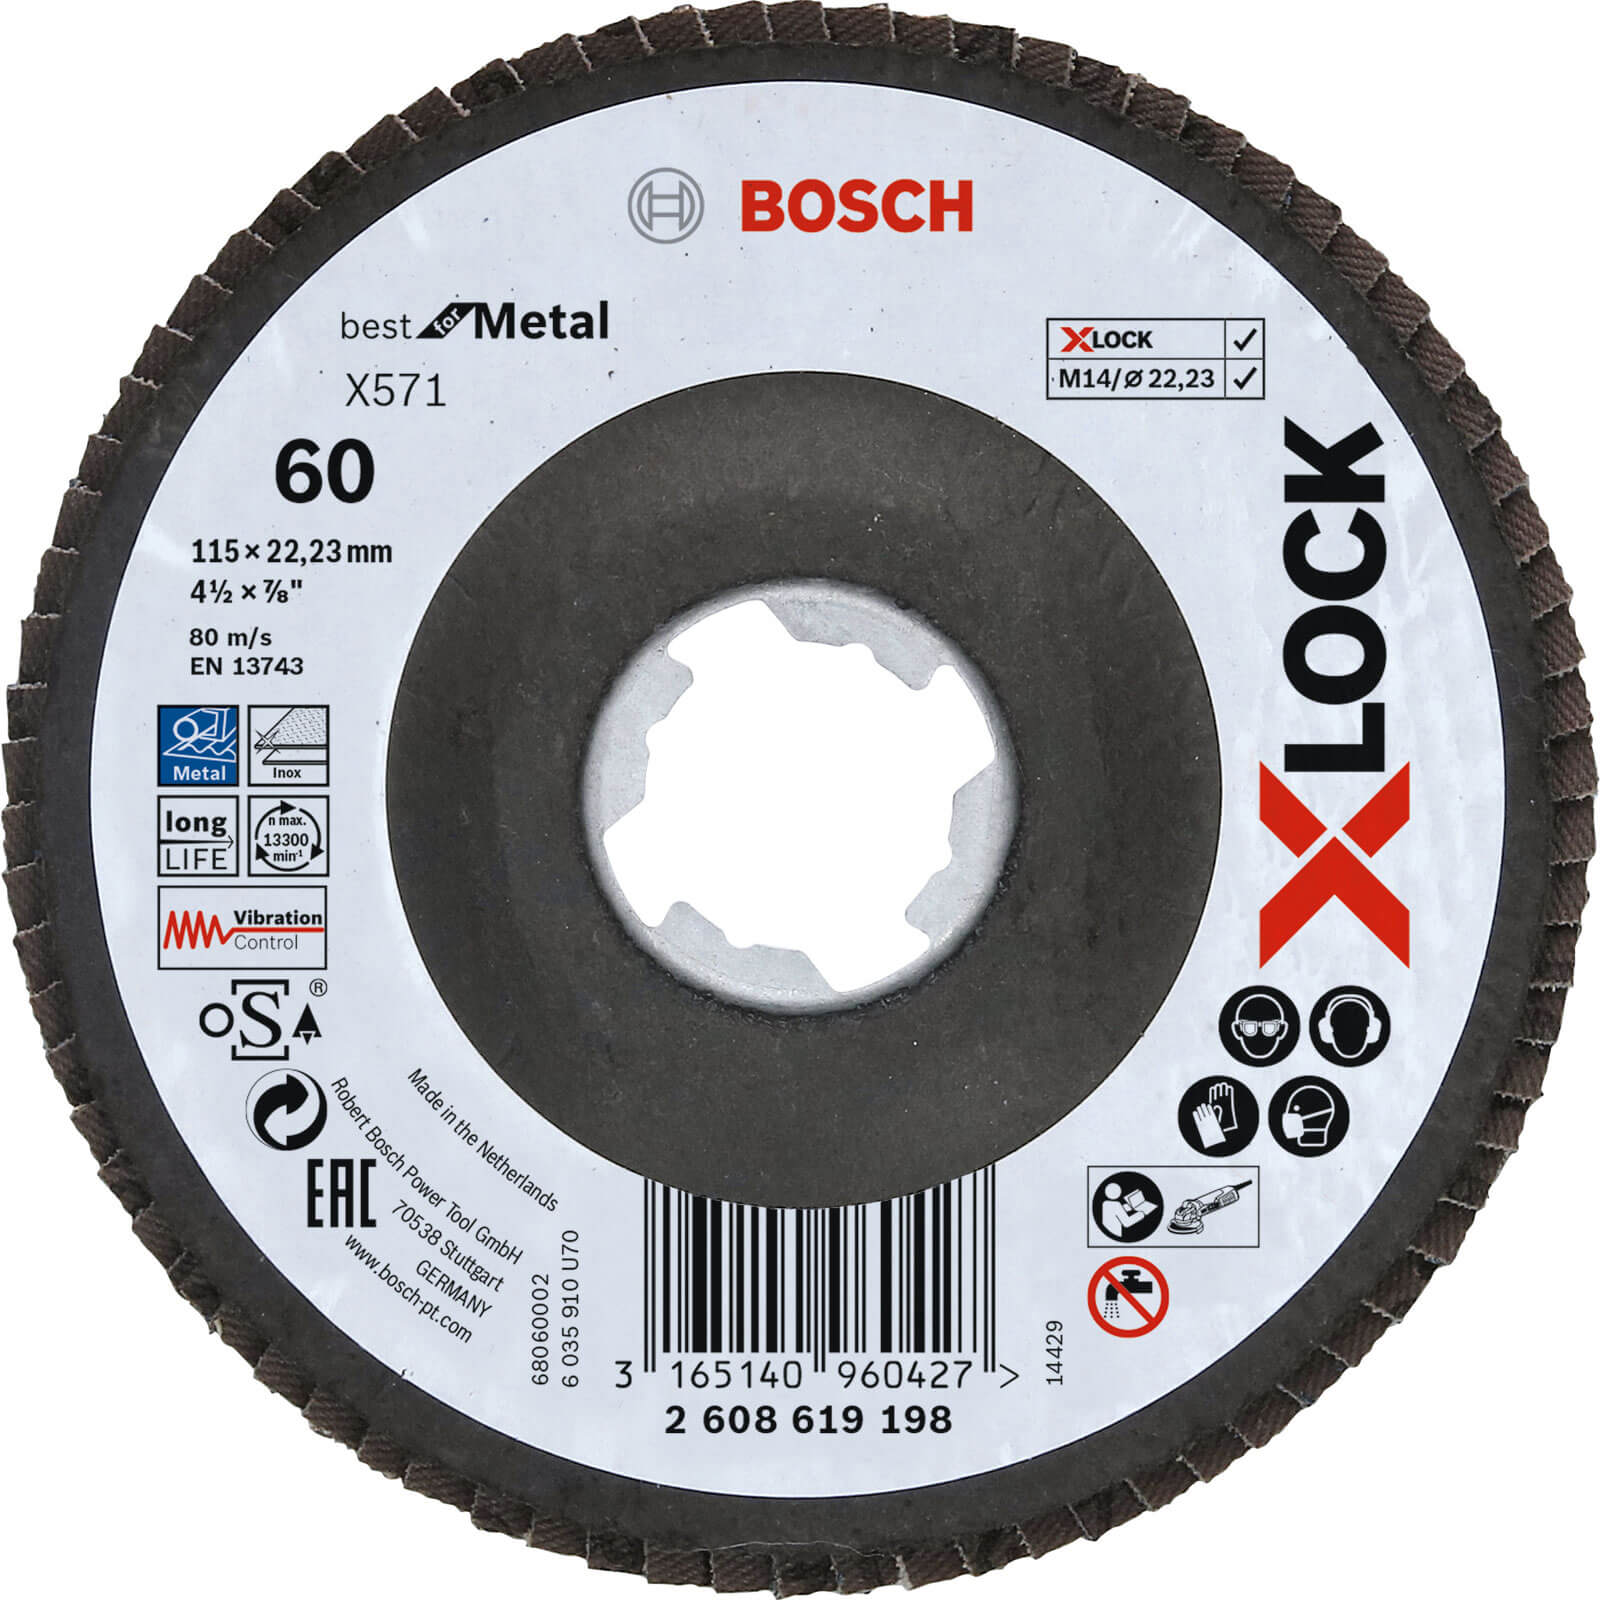 Photos - Cutting Disc Bosch X Lock Zirconium Abrasive Flap Disc 115mm 60g Pack of 1 2608619198 